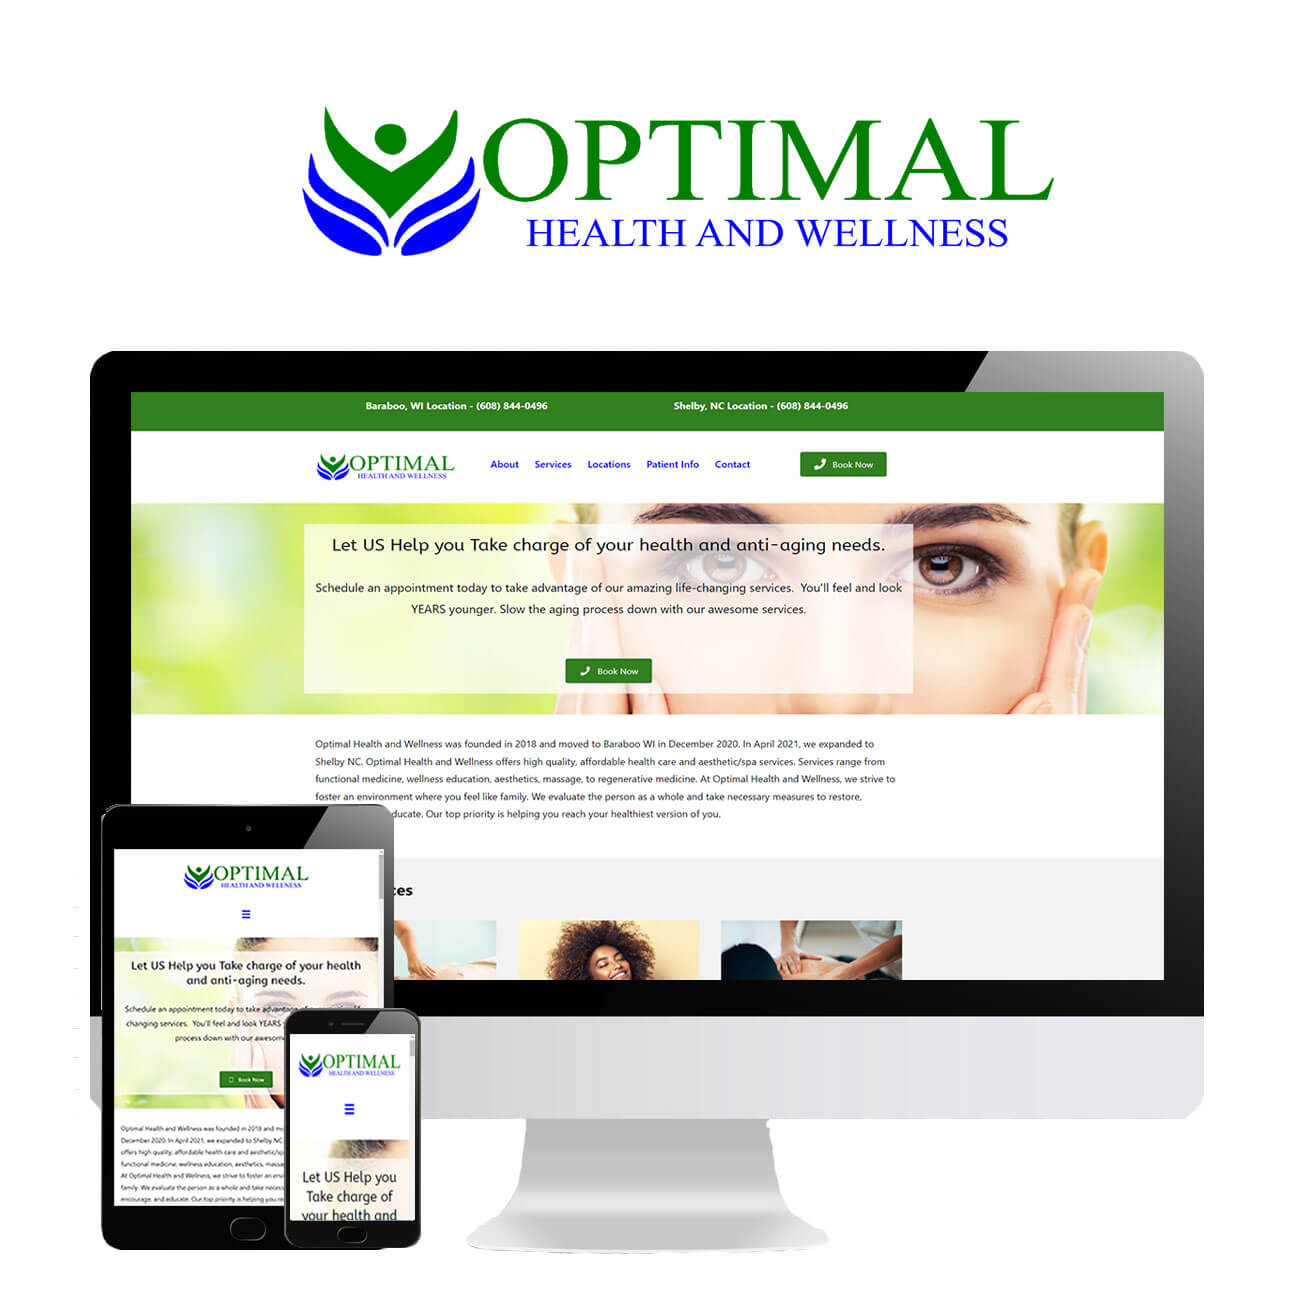 optimal-health-and-wellness-portfolio-with-the-logo